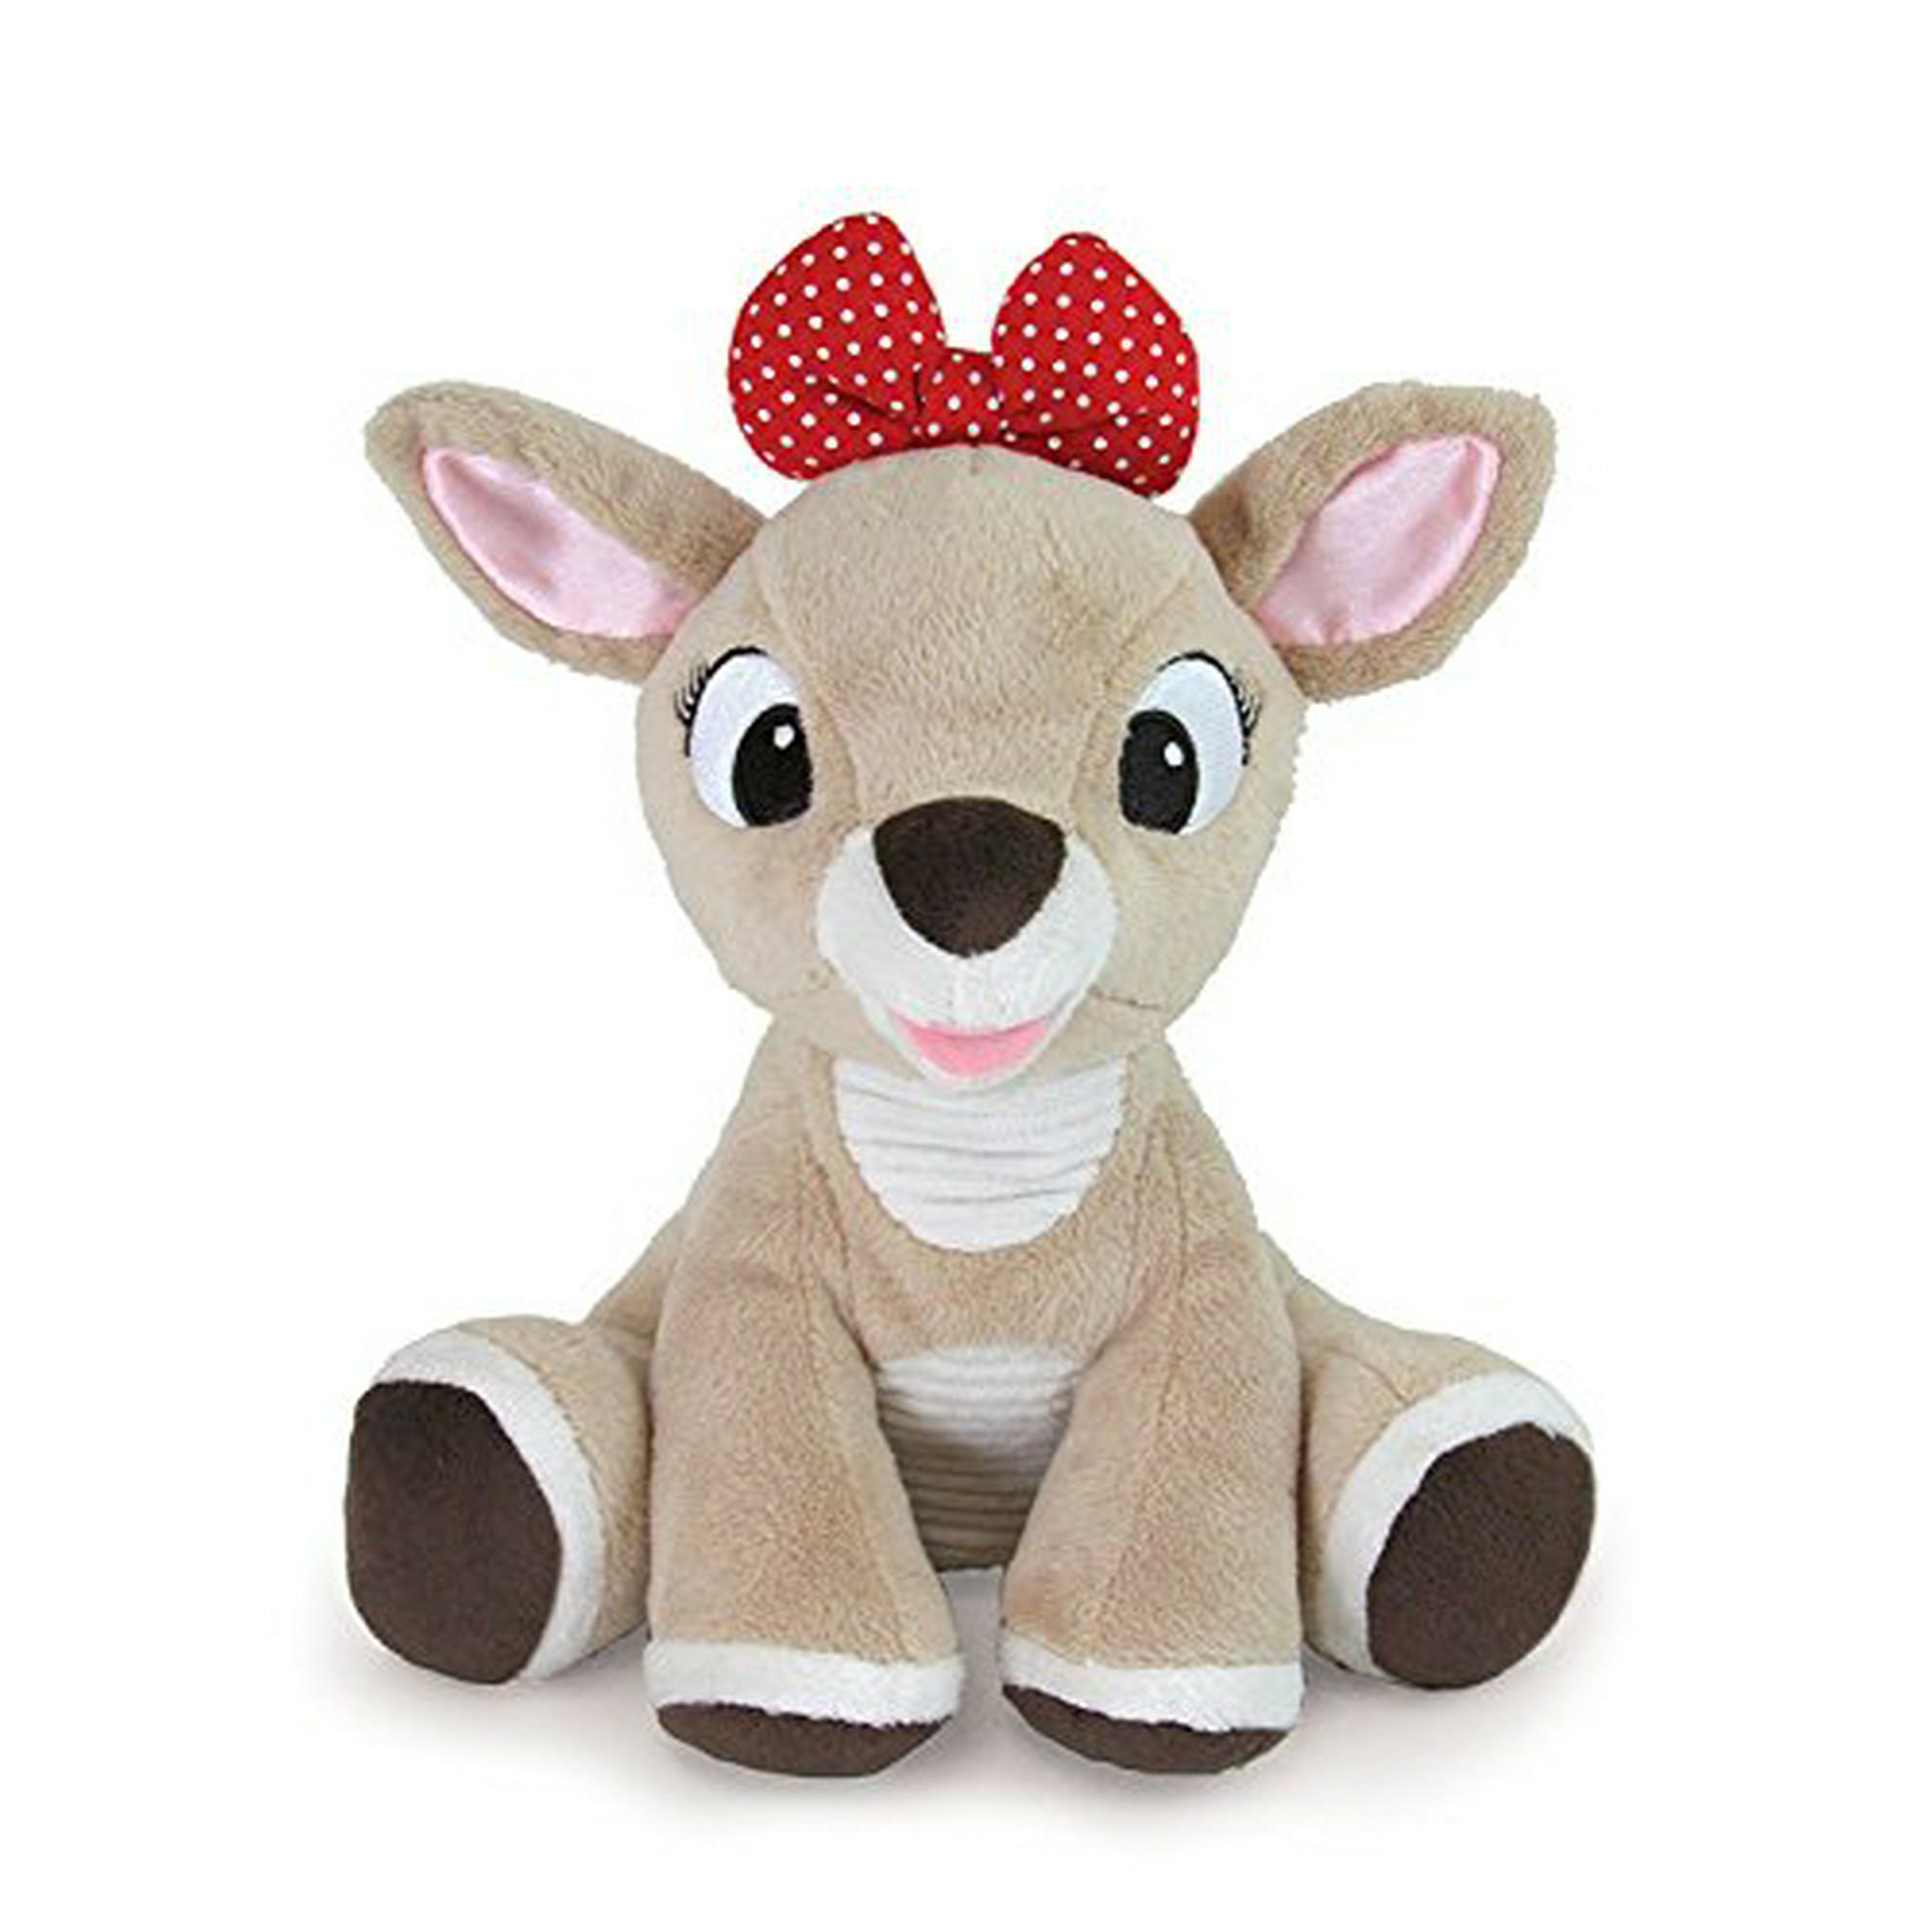 Clarice the Reindeer - Stuffed Animal Plush Toy | Walmart Canada